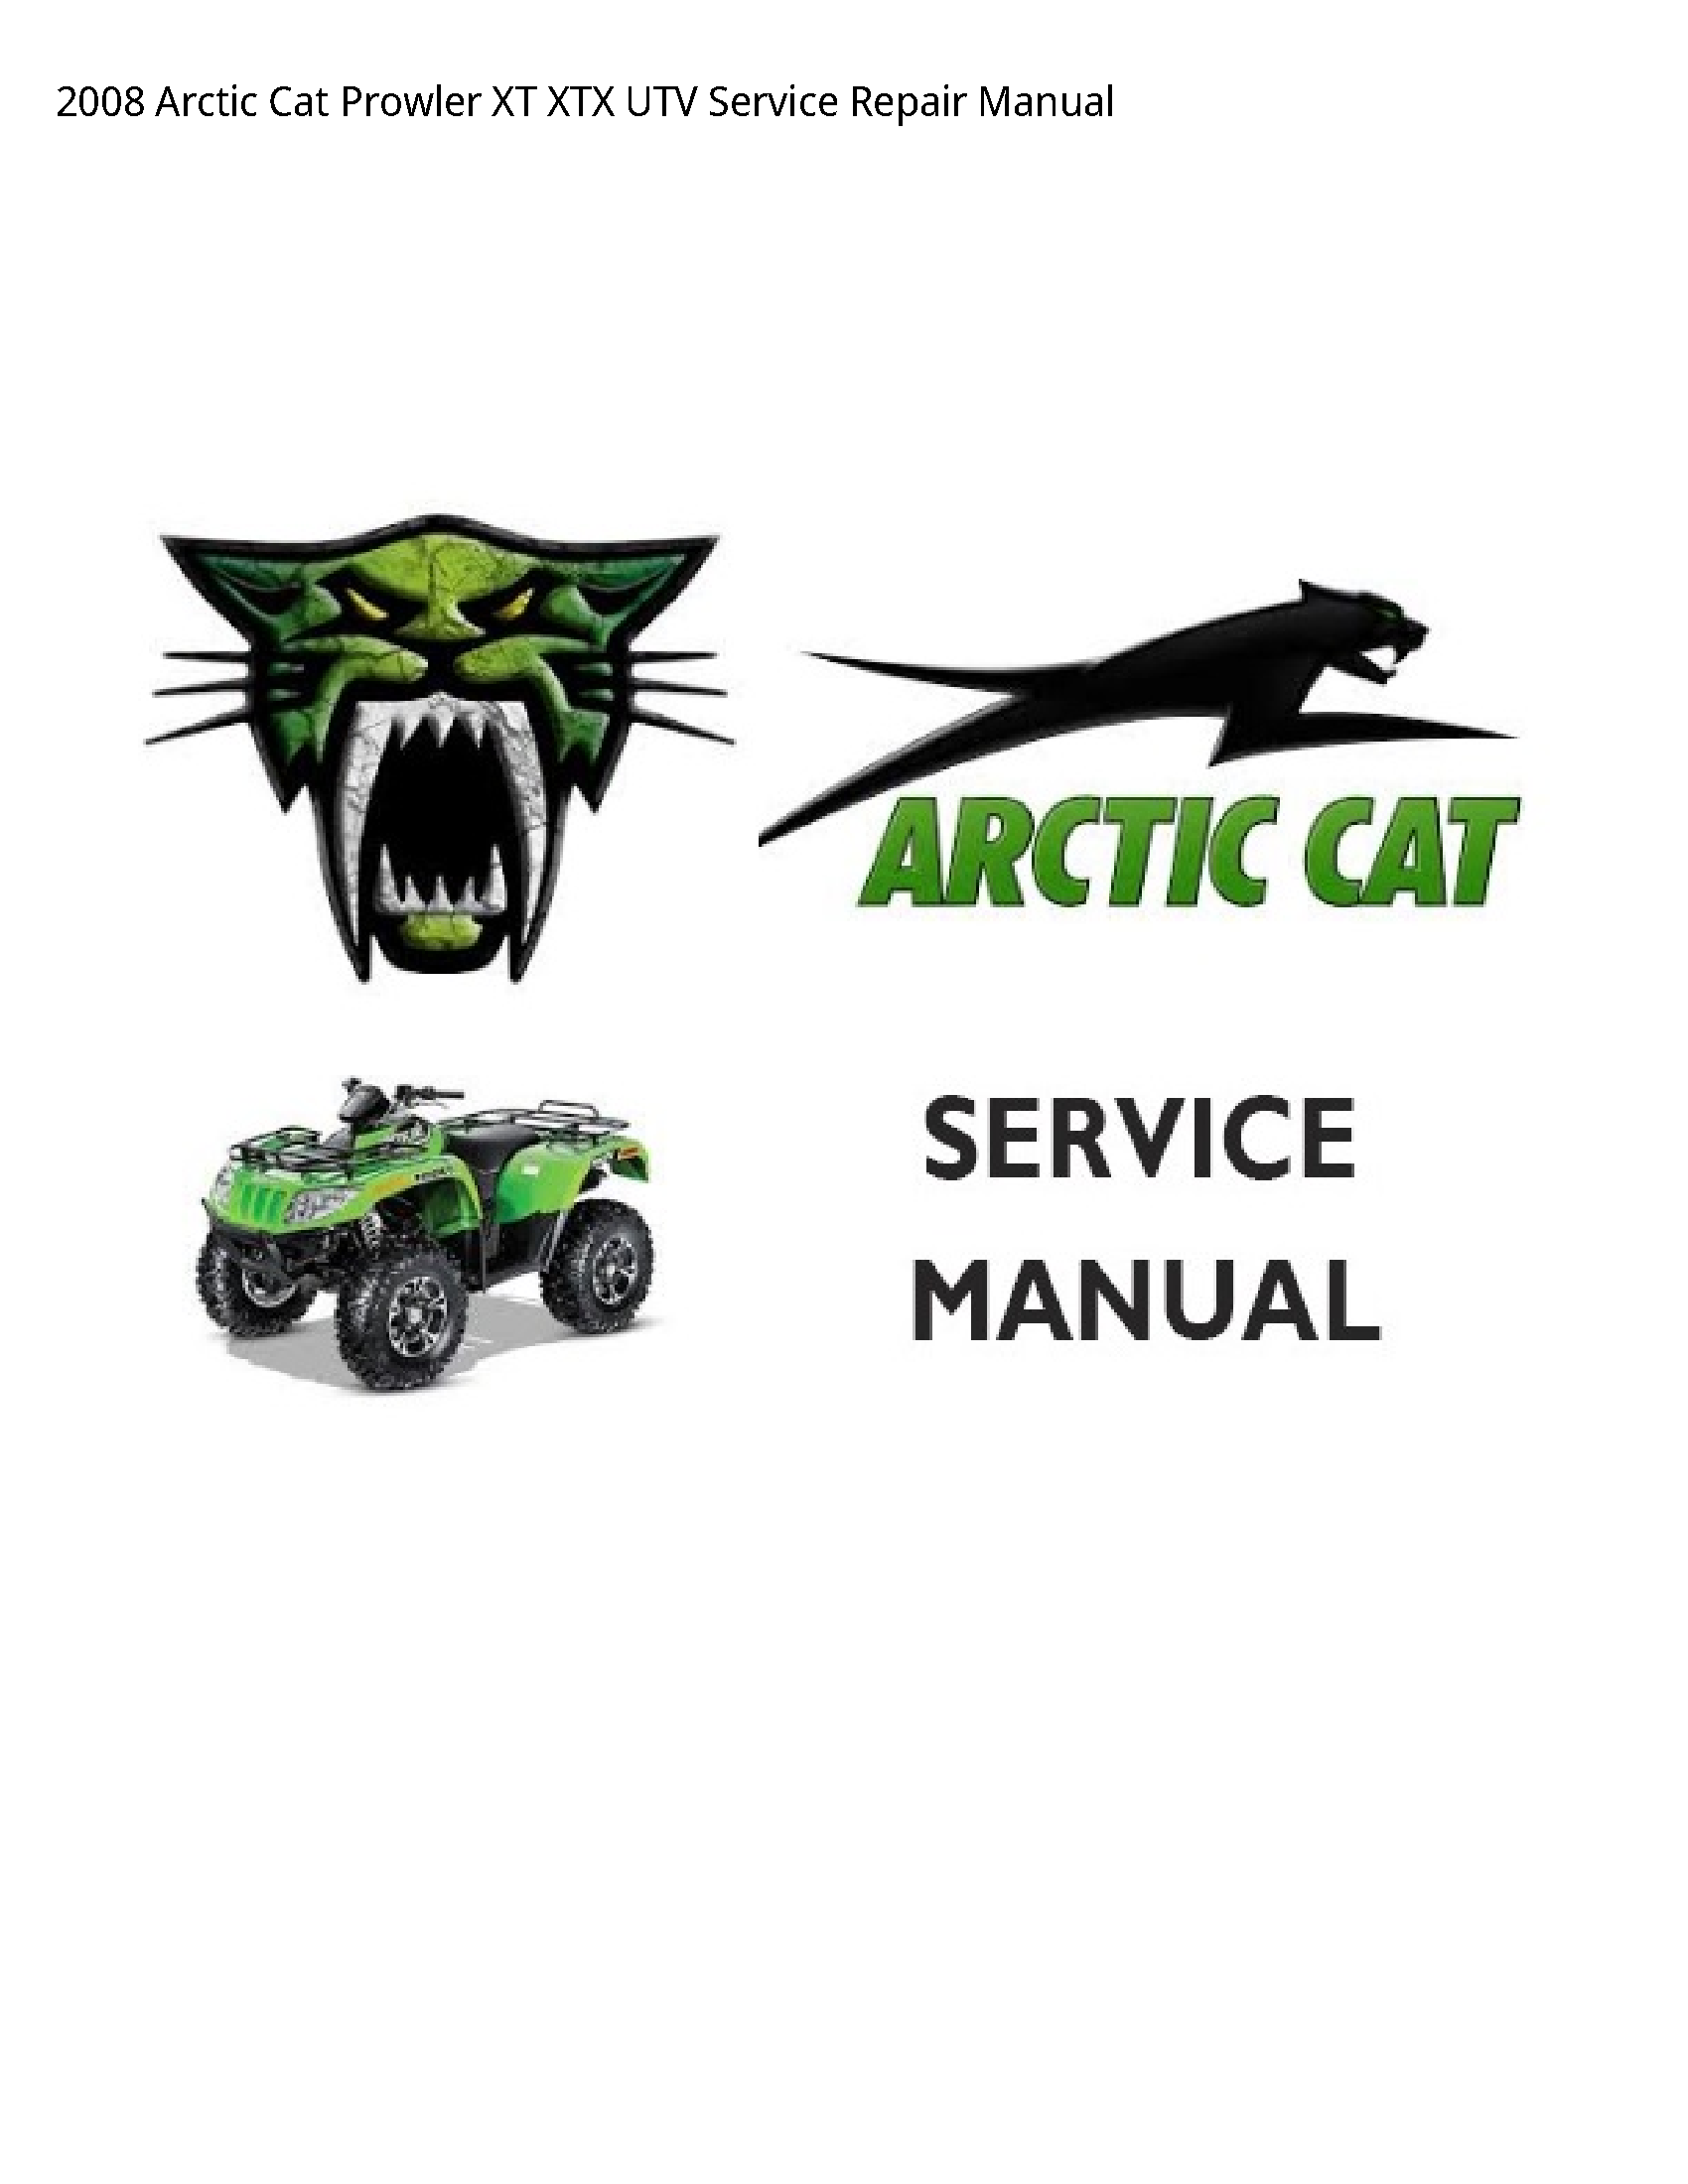 Arctic Cat Prowler XT XTX UTV manual